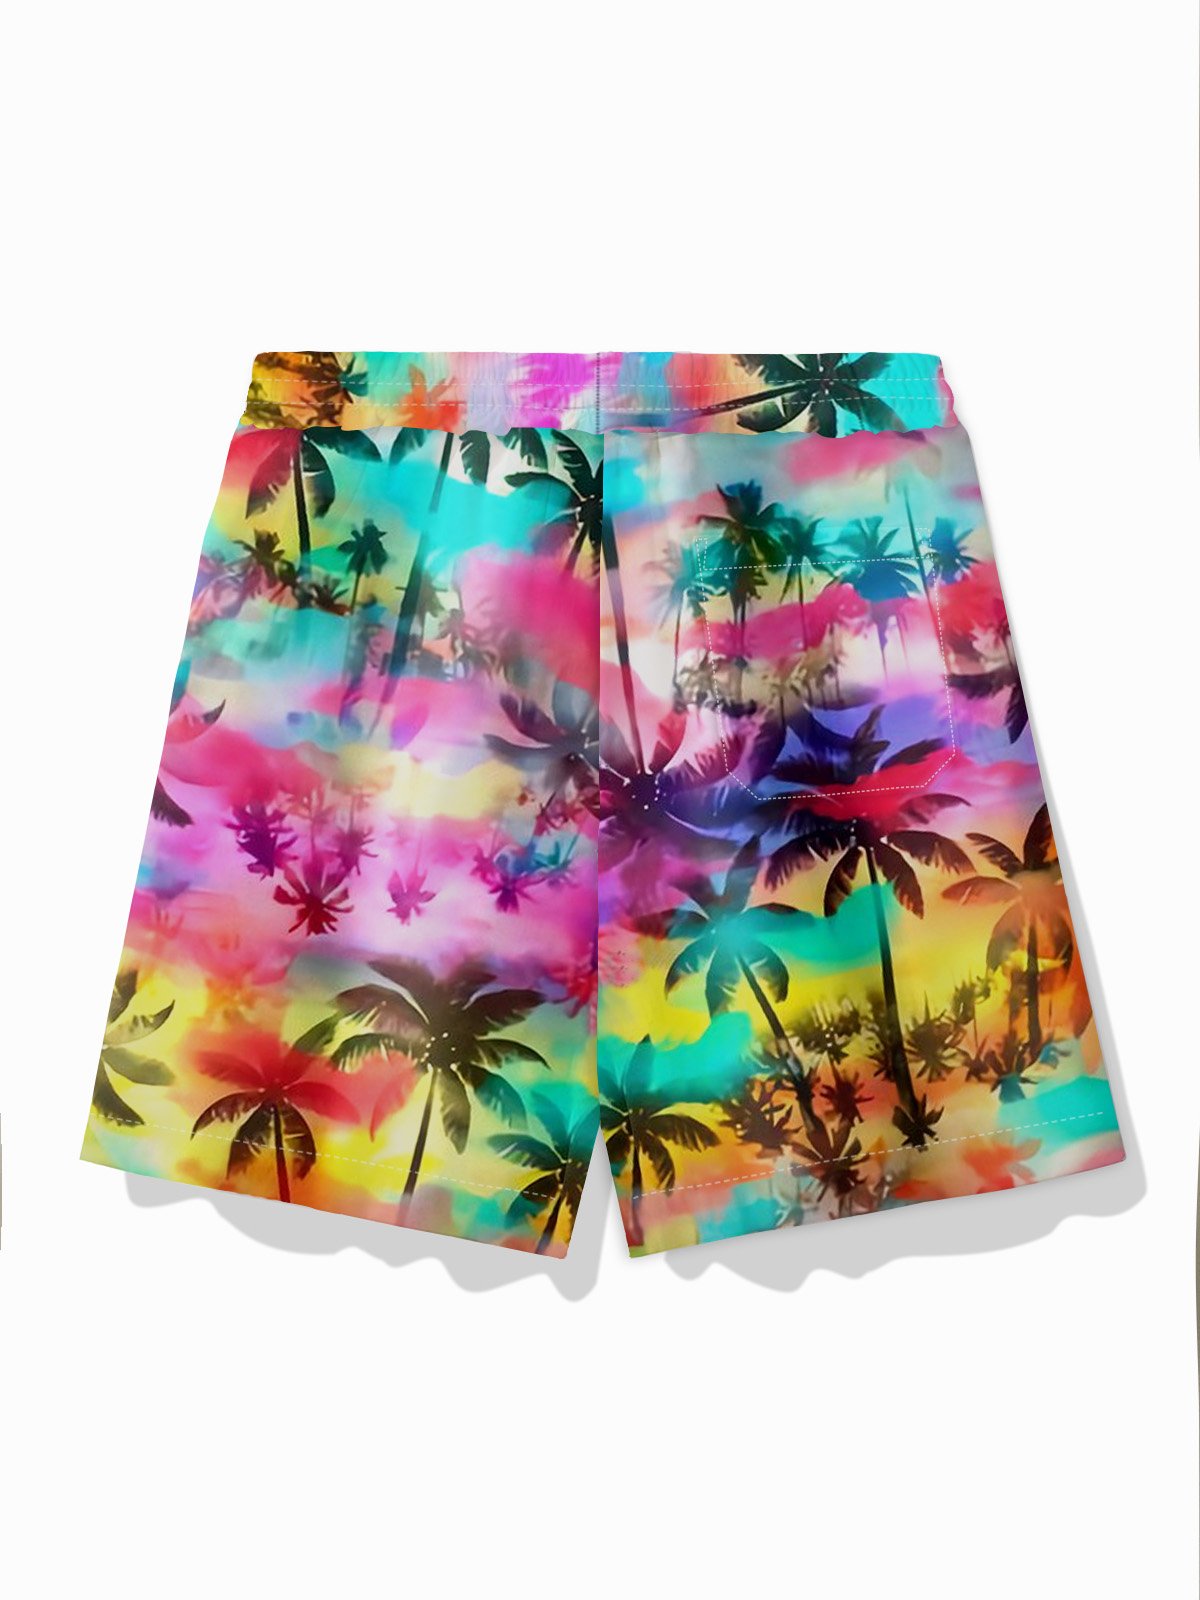 Royaura® Hawaiian Coconut Tree Silhouette Print Men's Drawstring Shorts Board Shorts